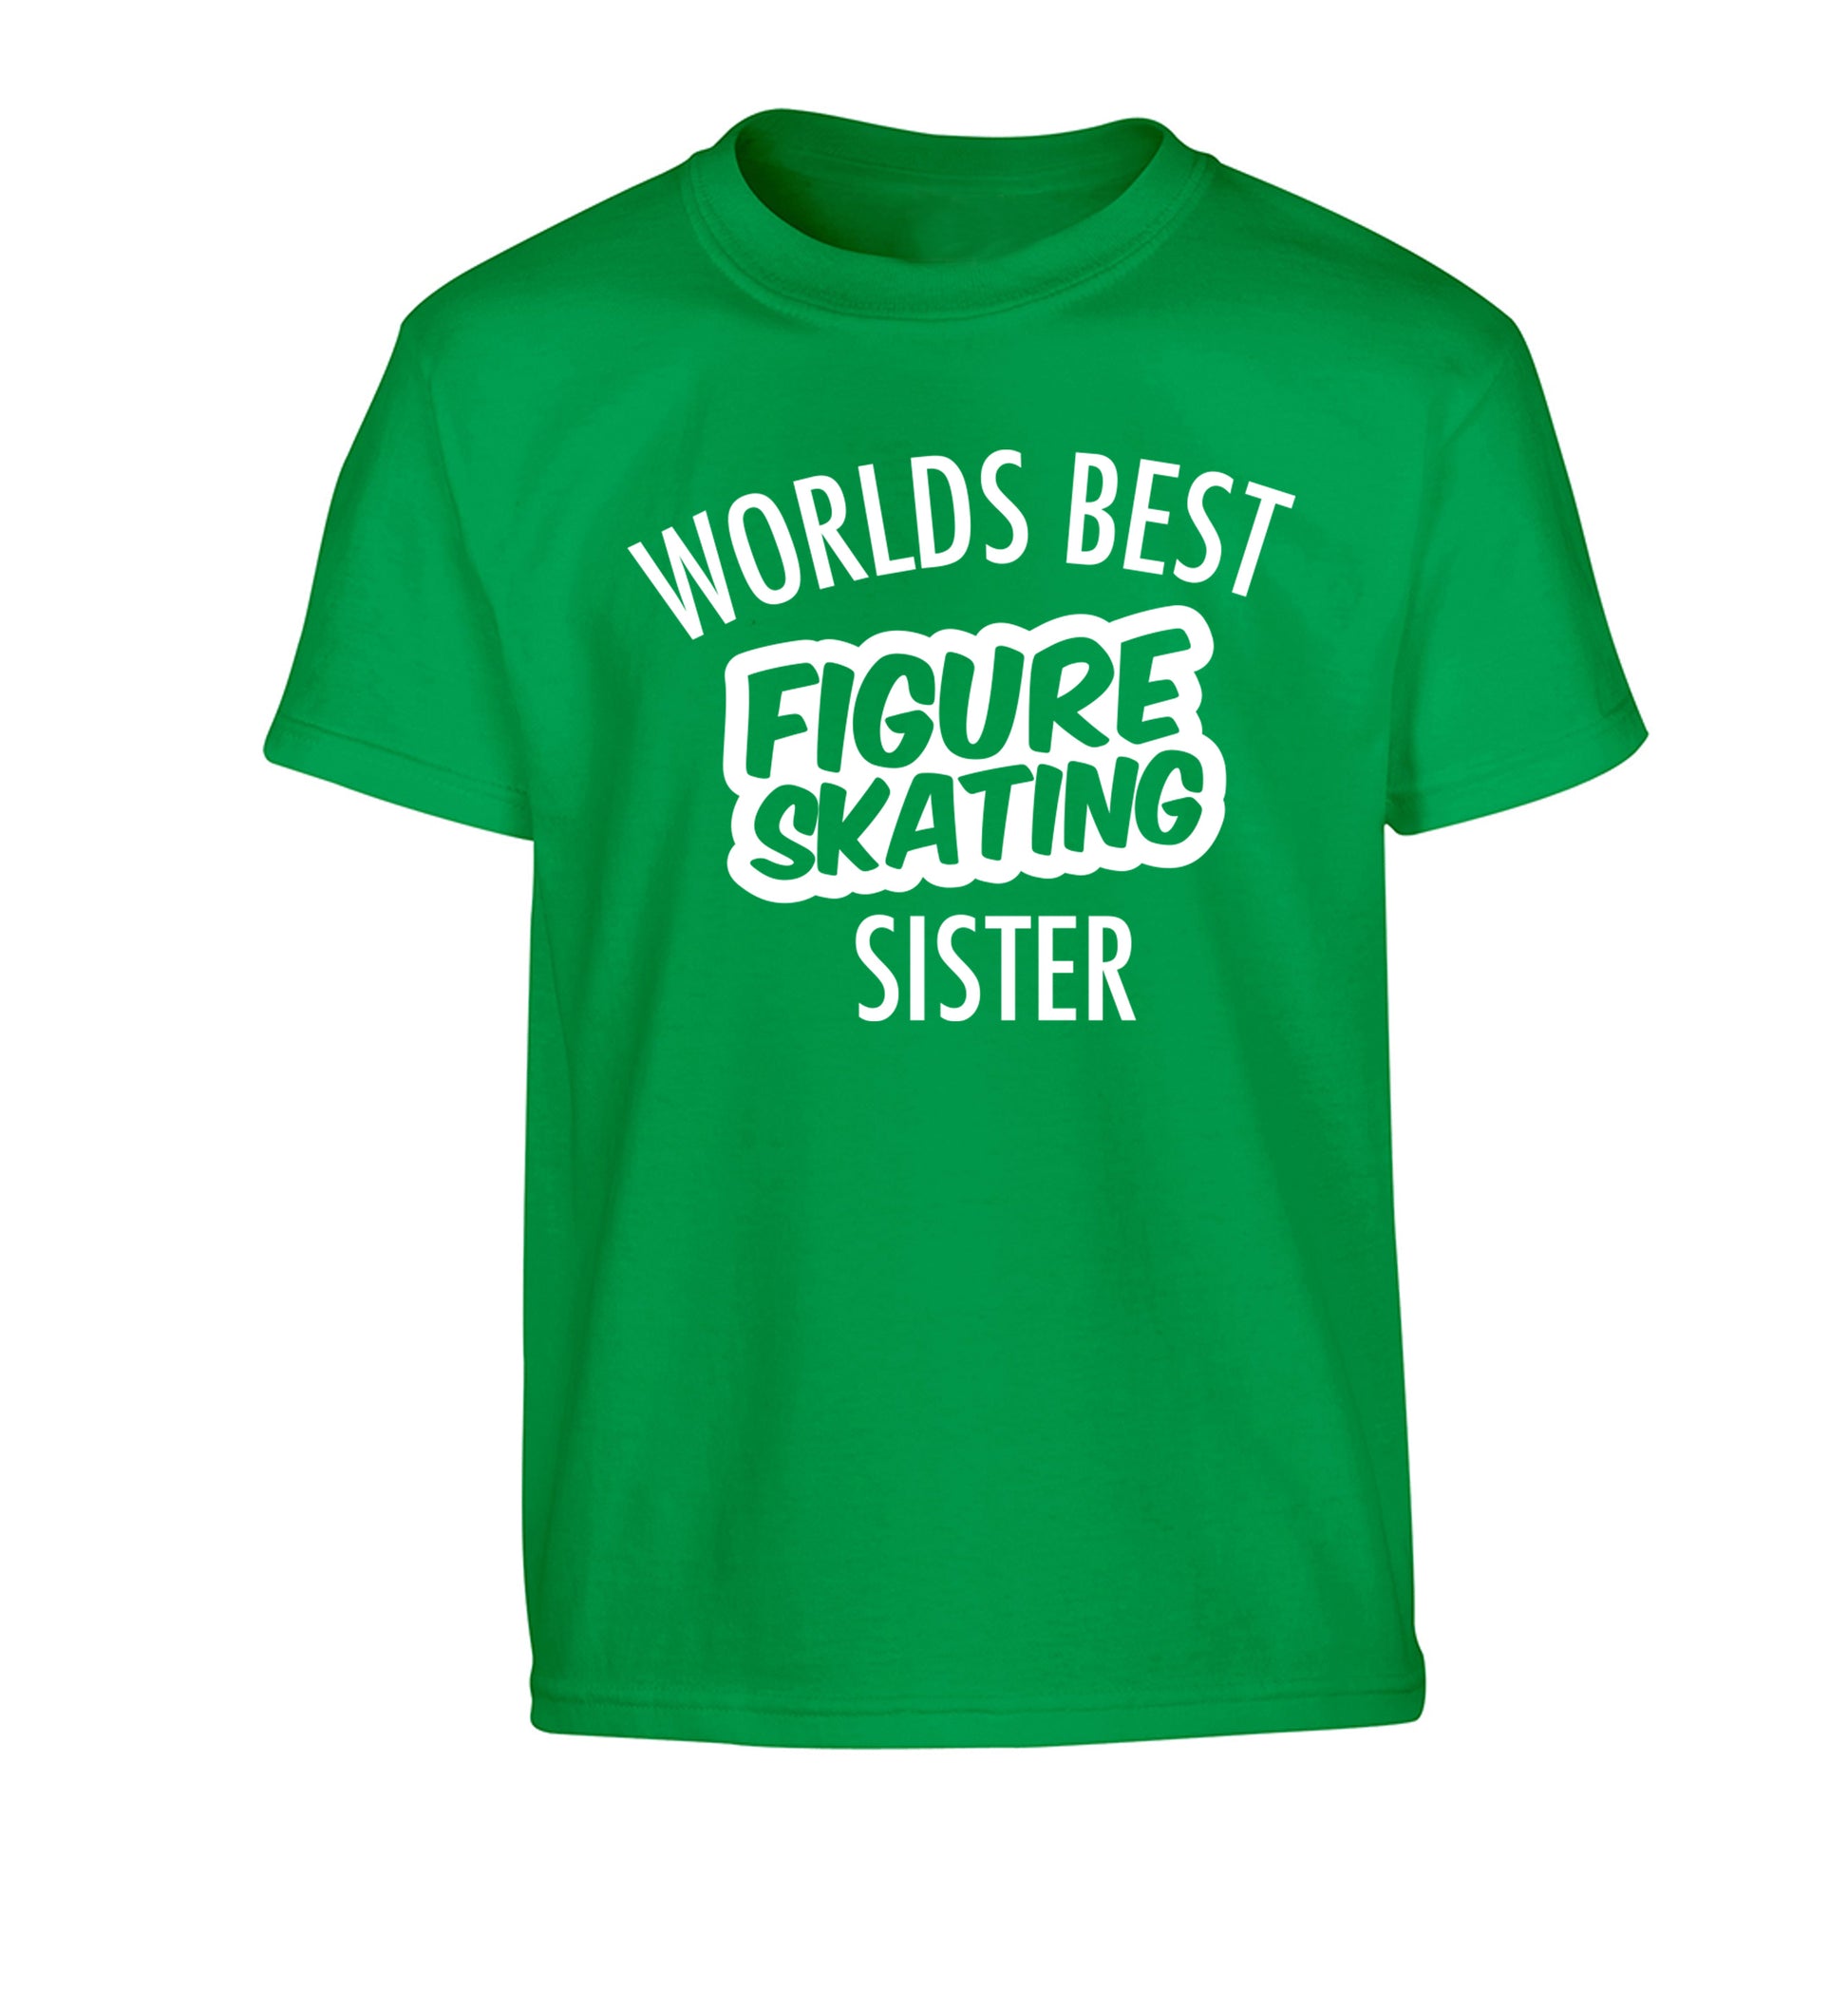 Worlds best figure skating sisterChildren's green Tshirt 12-14 Years